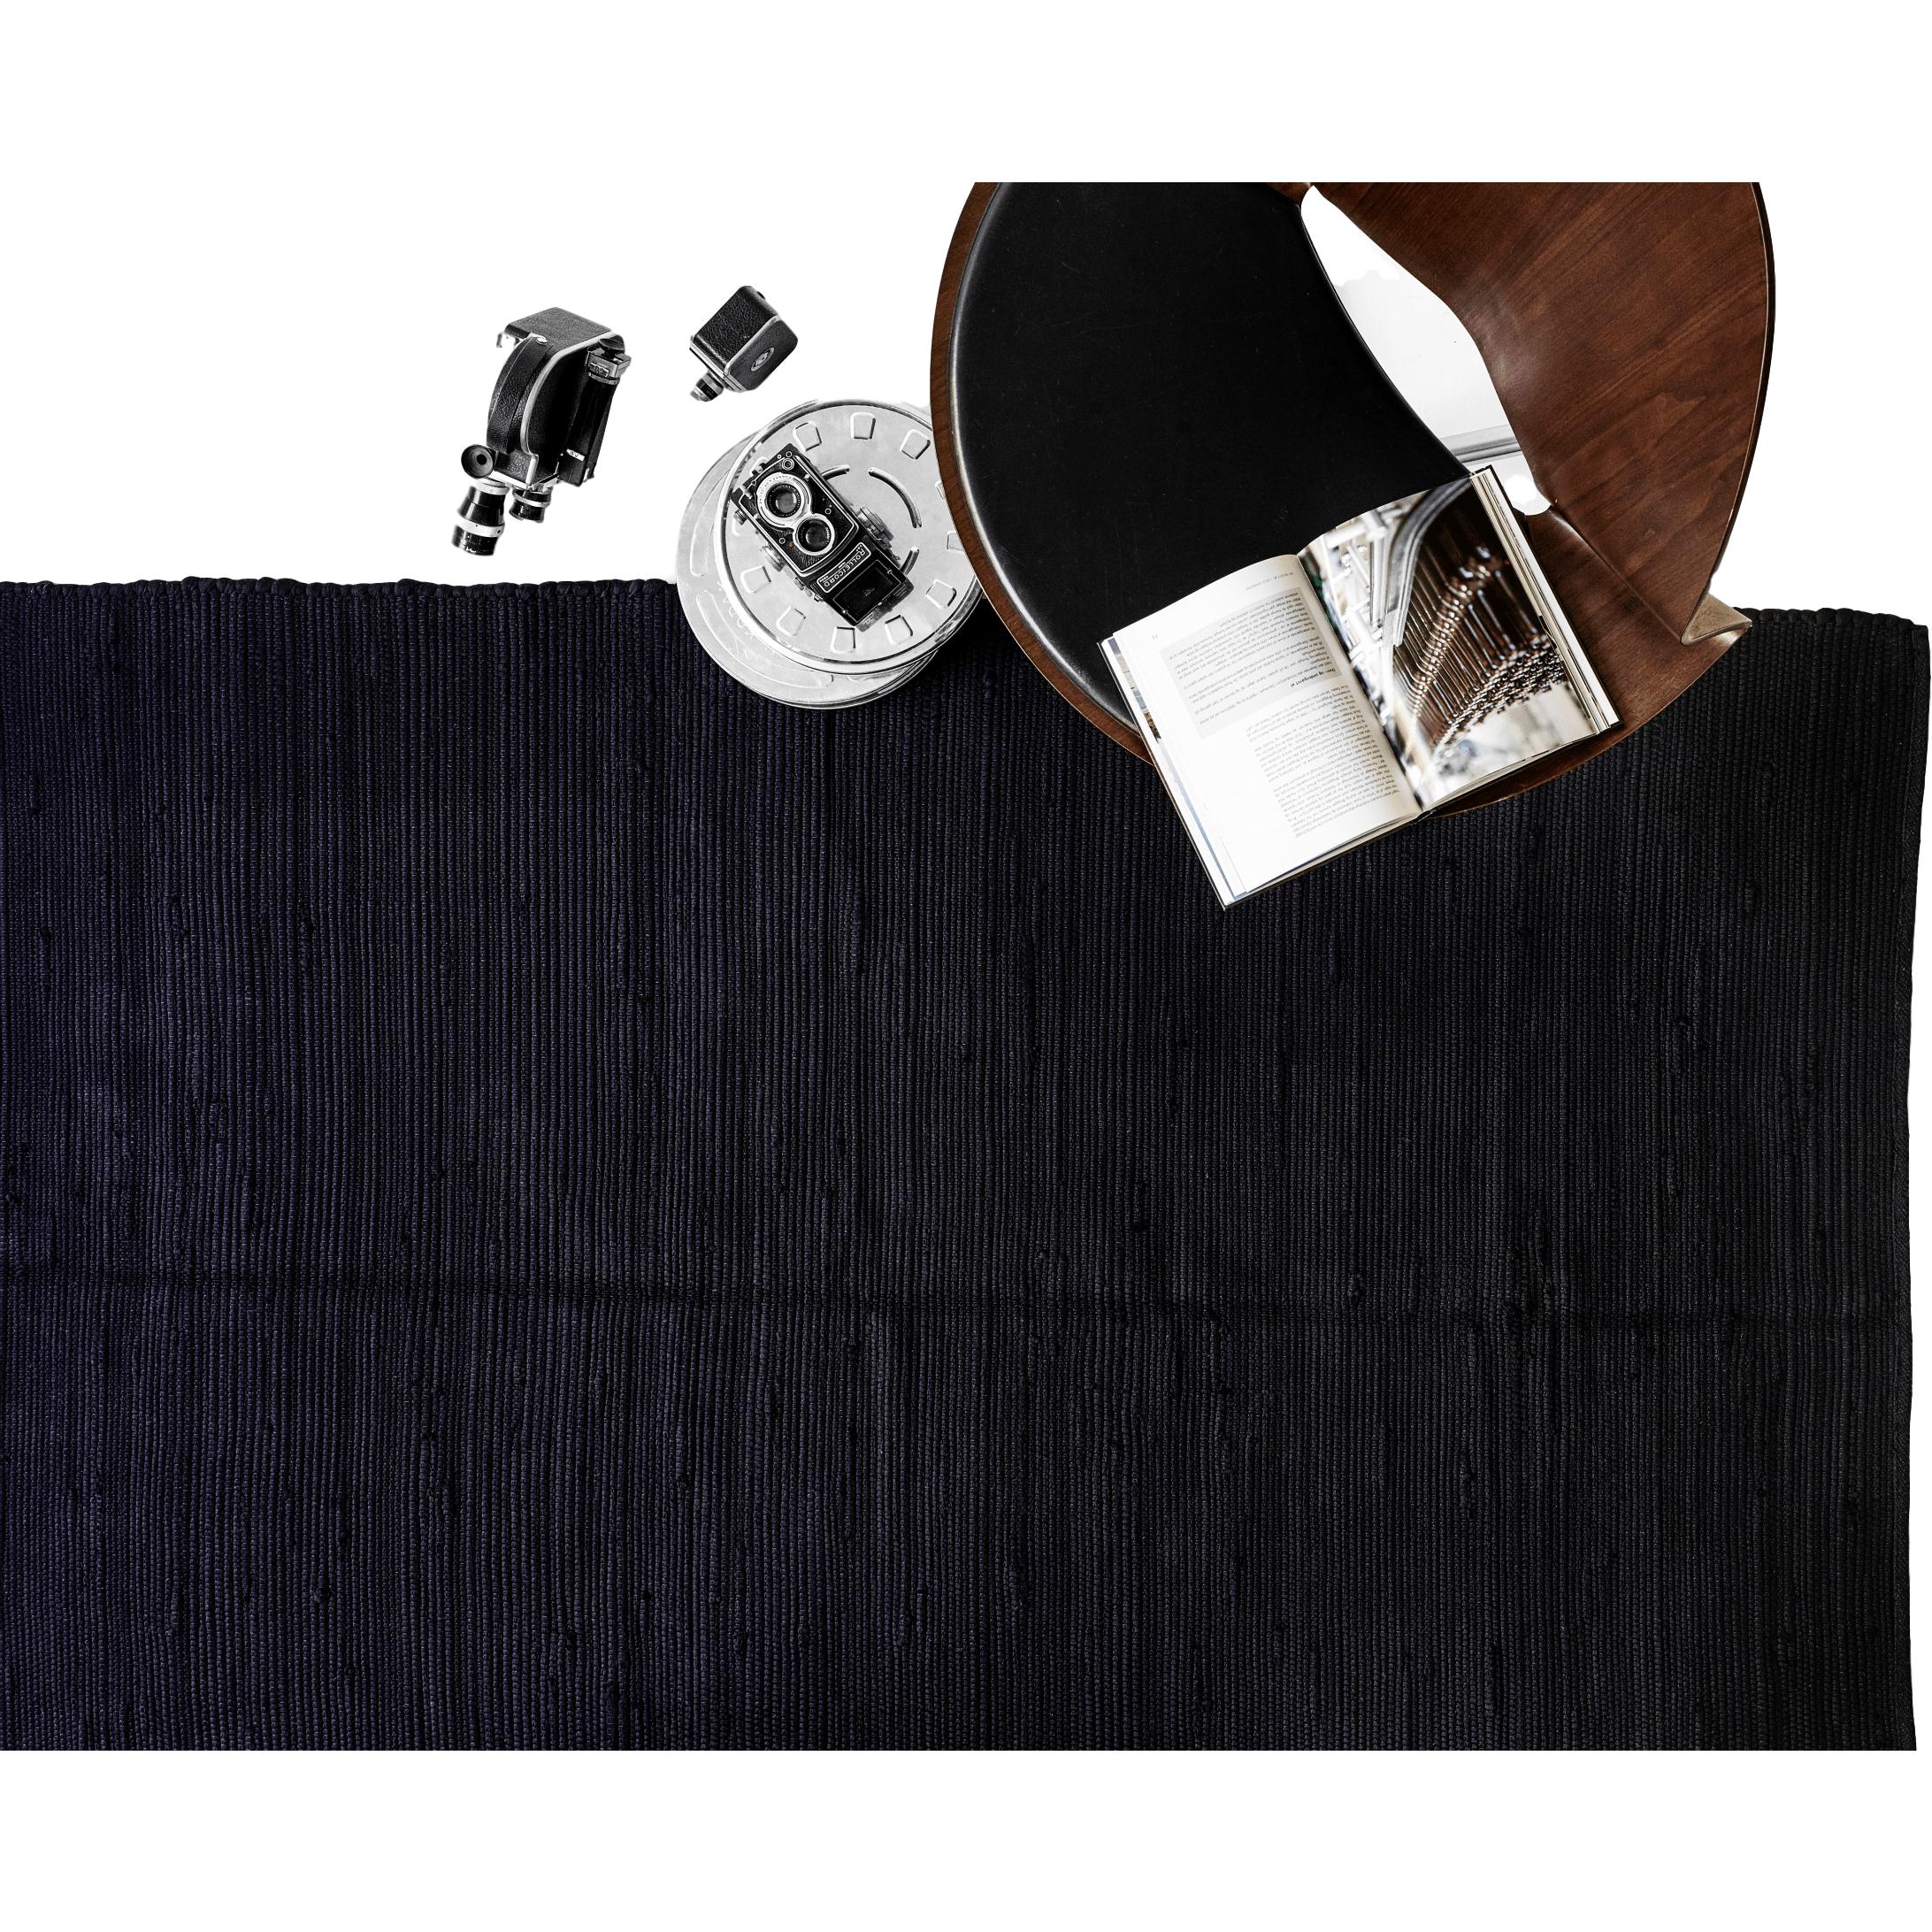 Rug Solid Bomullsmatta svart, 75 x 300 cm